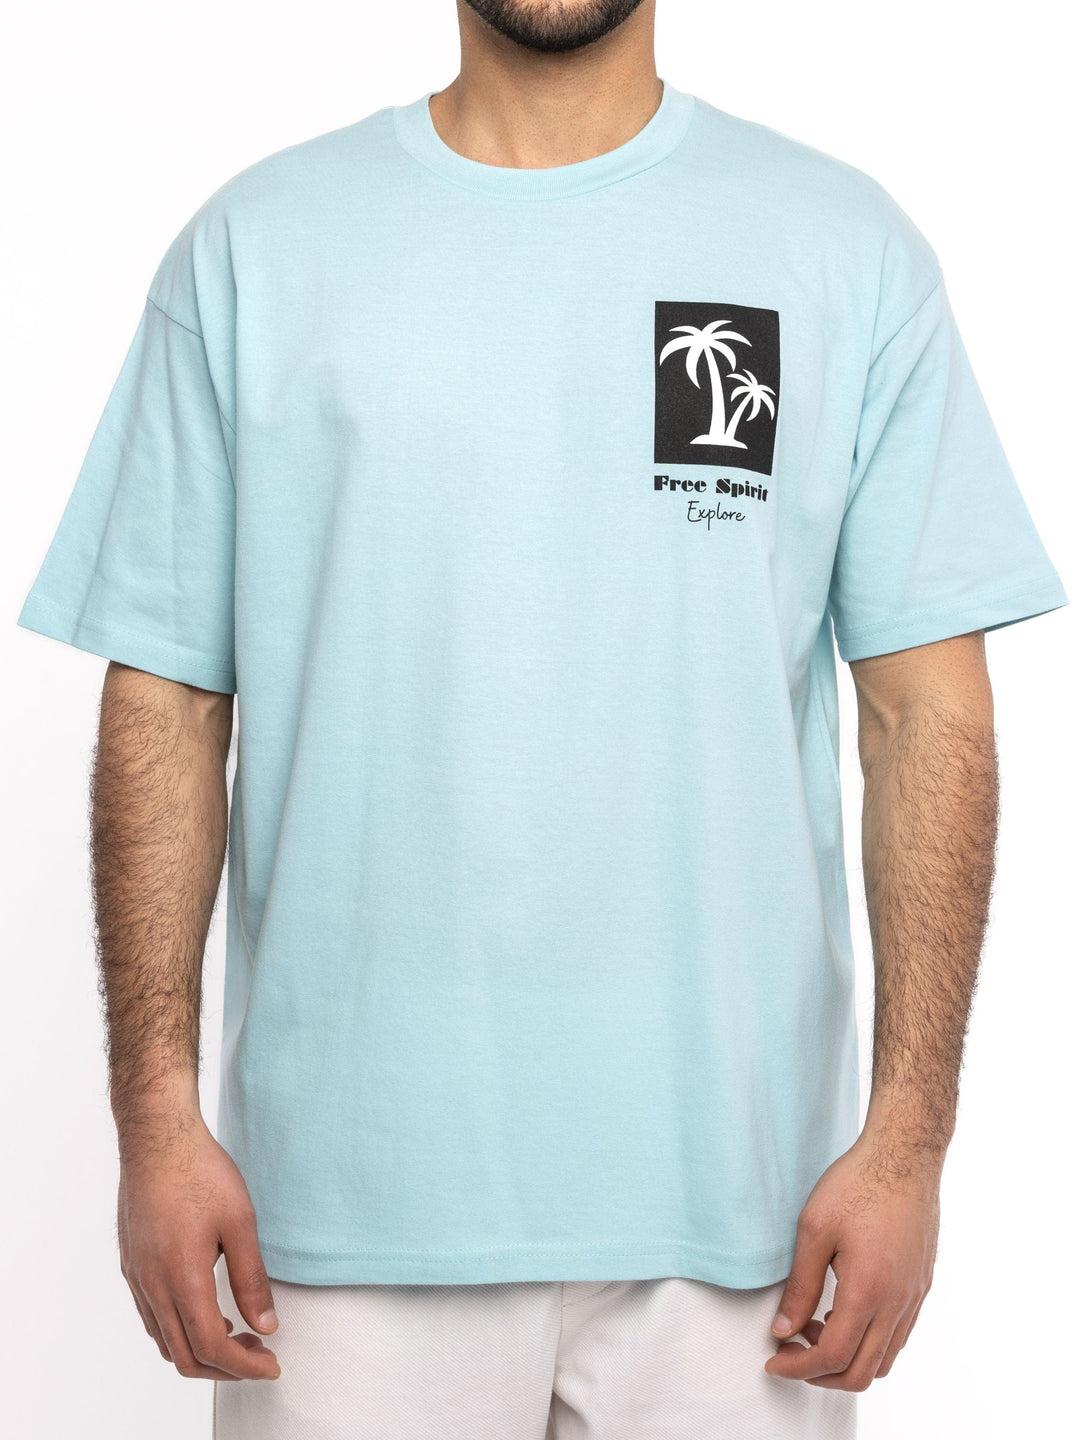 Zhivago Men Men T-shirt Baby Blue Free Spirit T-Shirt